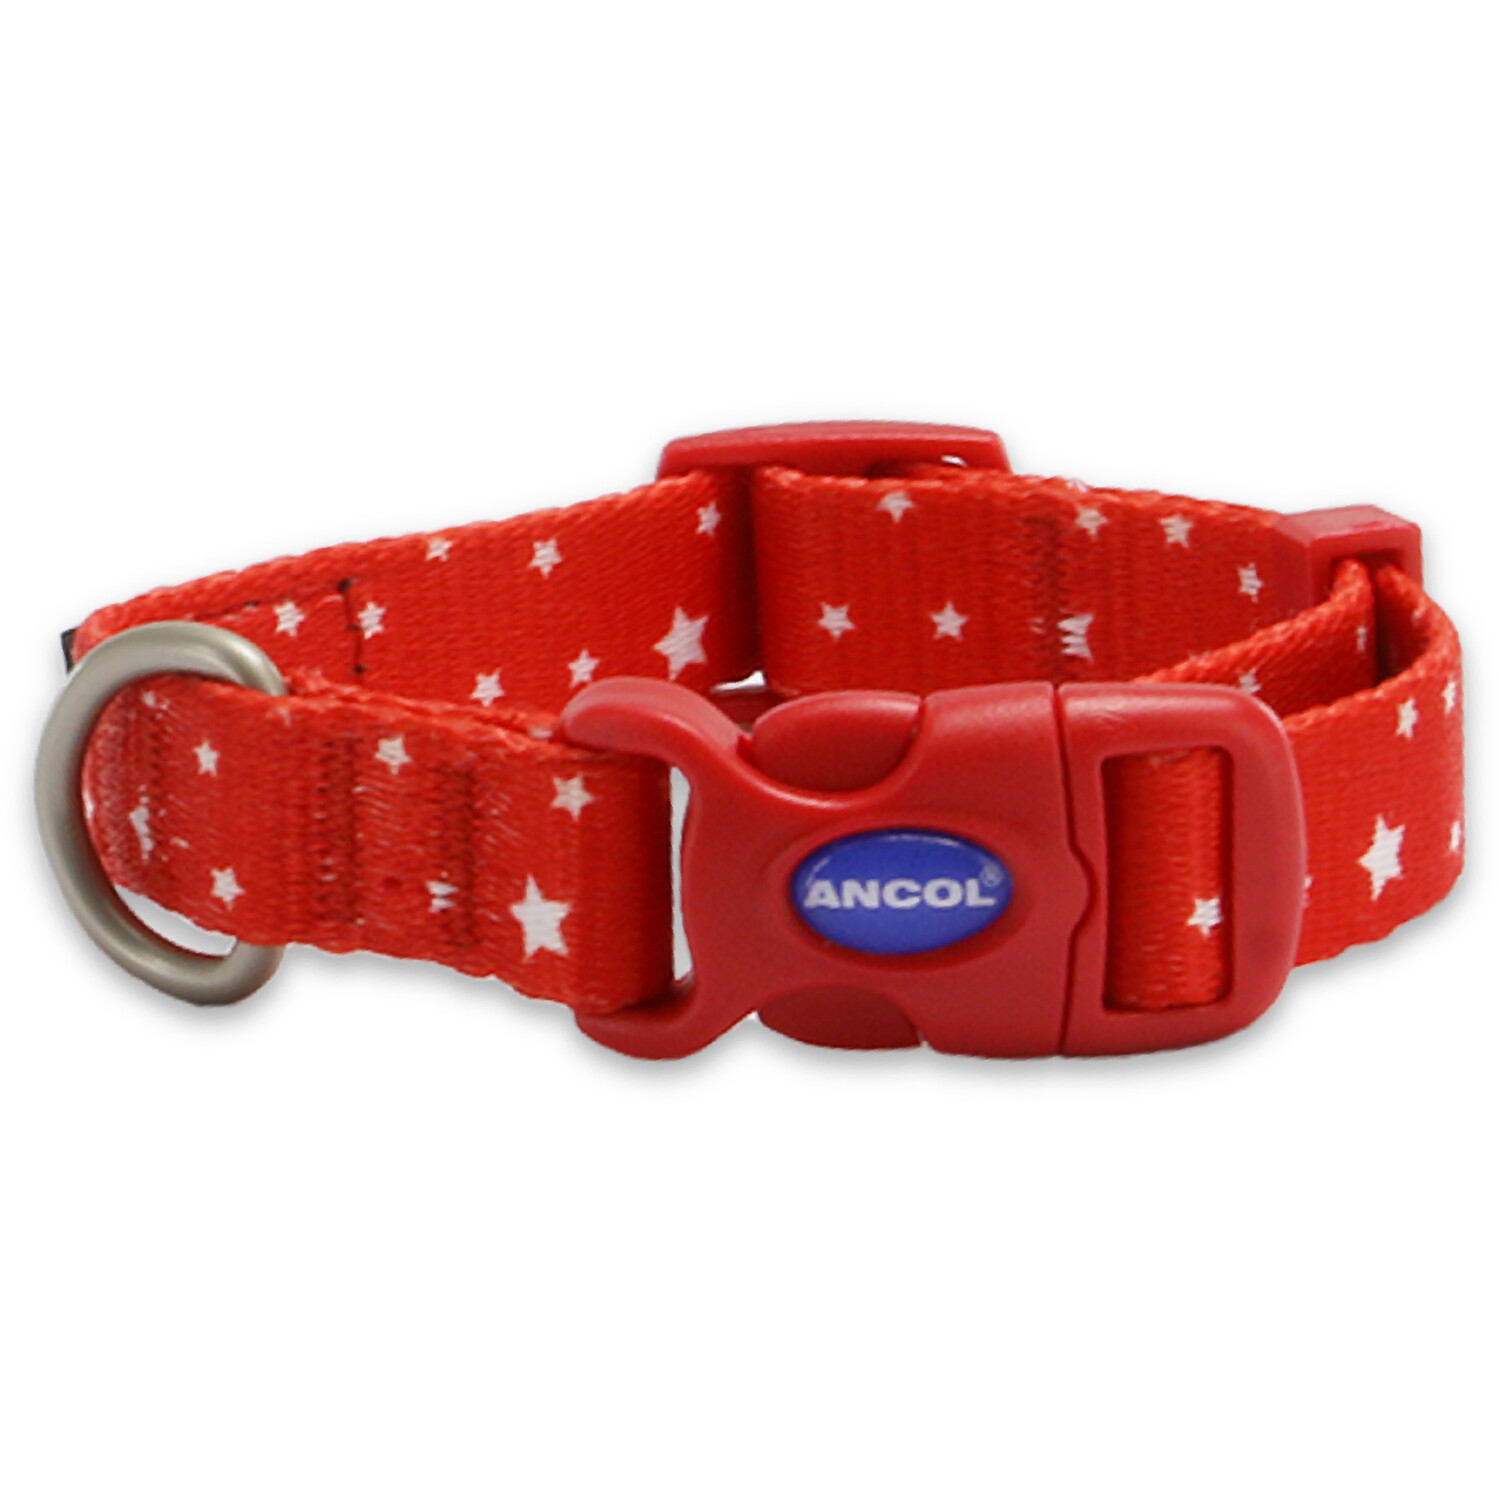 Star Patterned Dog Collar - Red / 20 - 30cm Neck Image